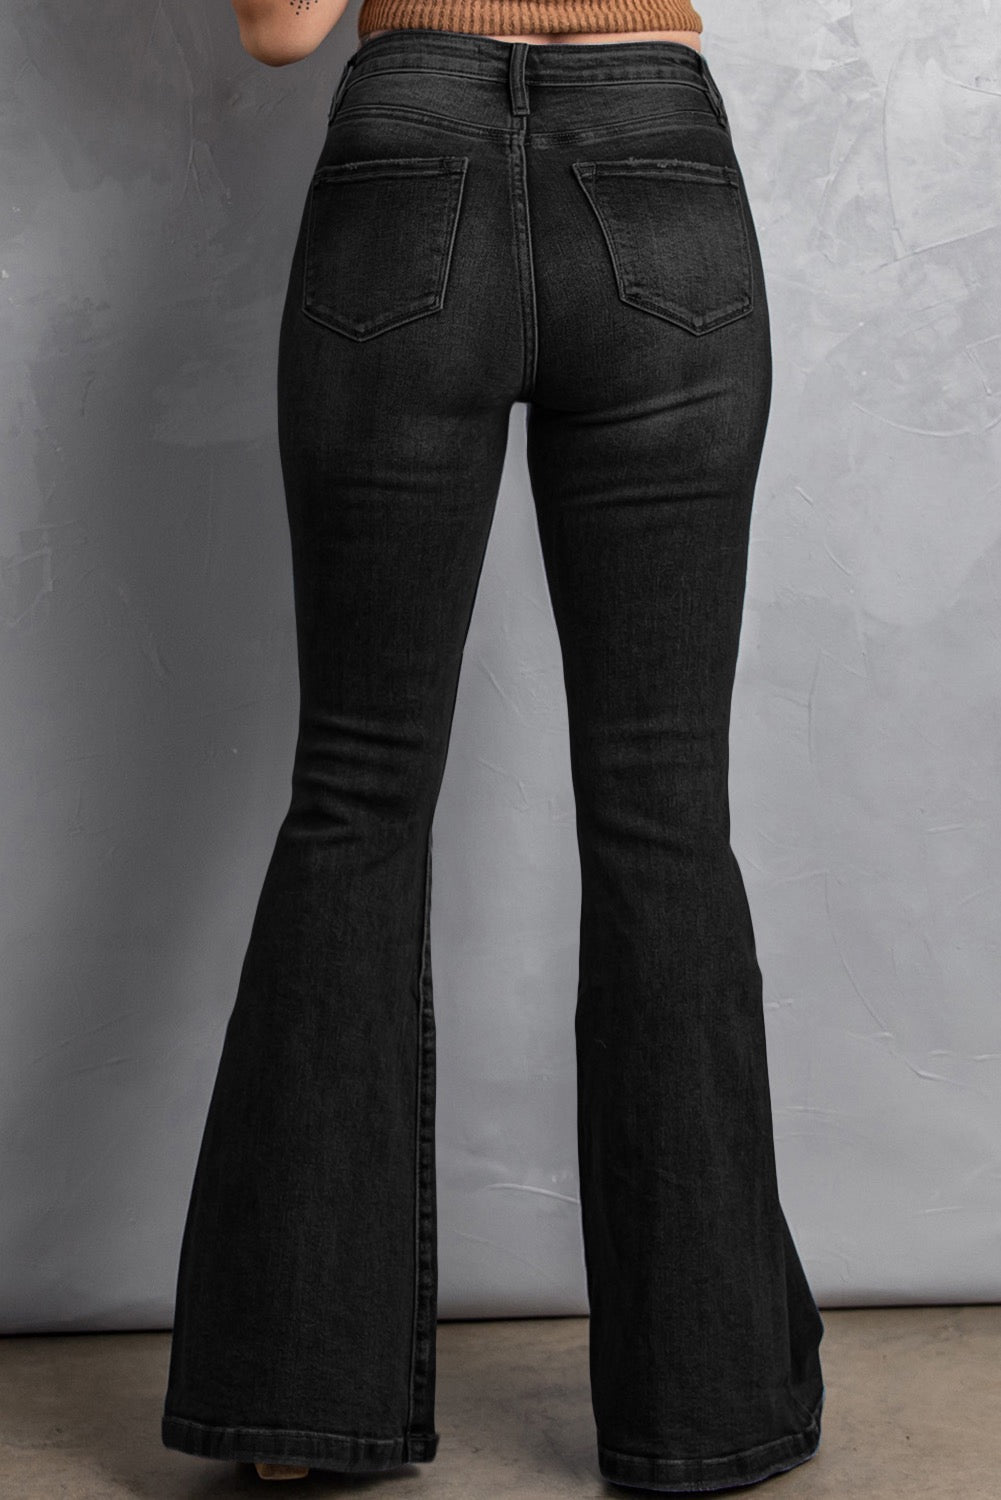 Black high waist flare jean with pockets